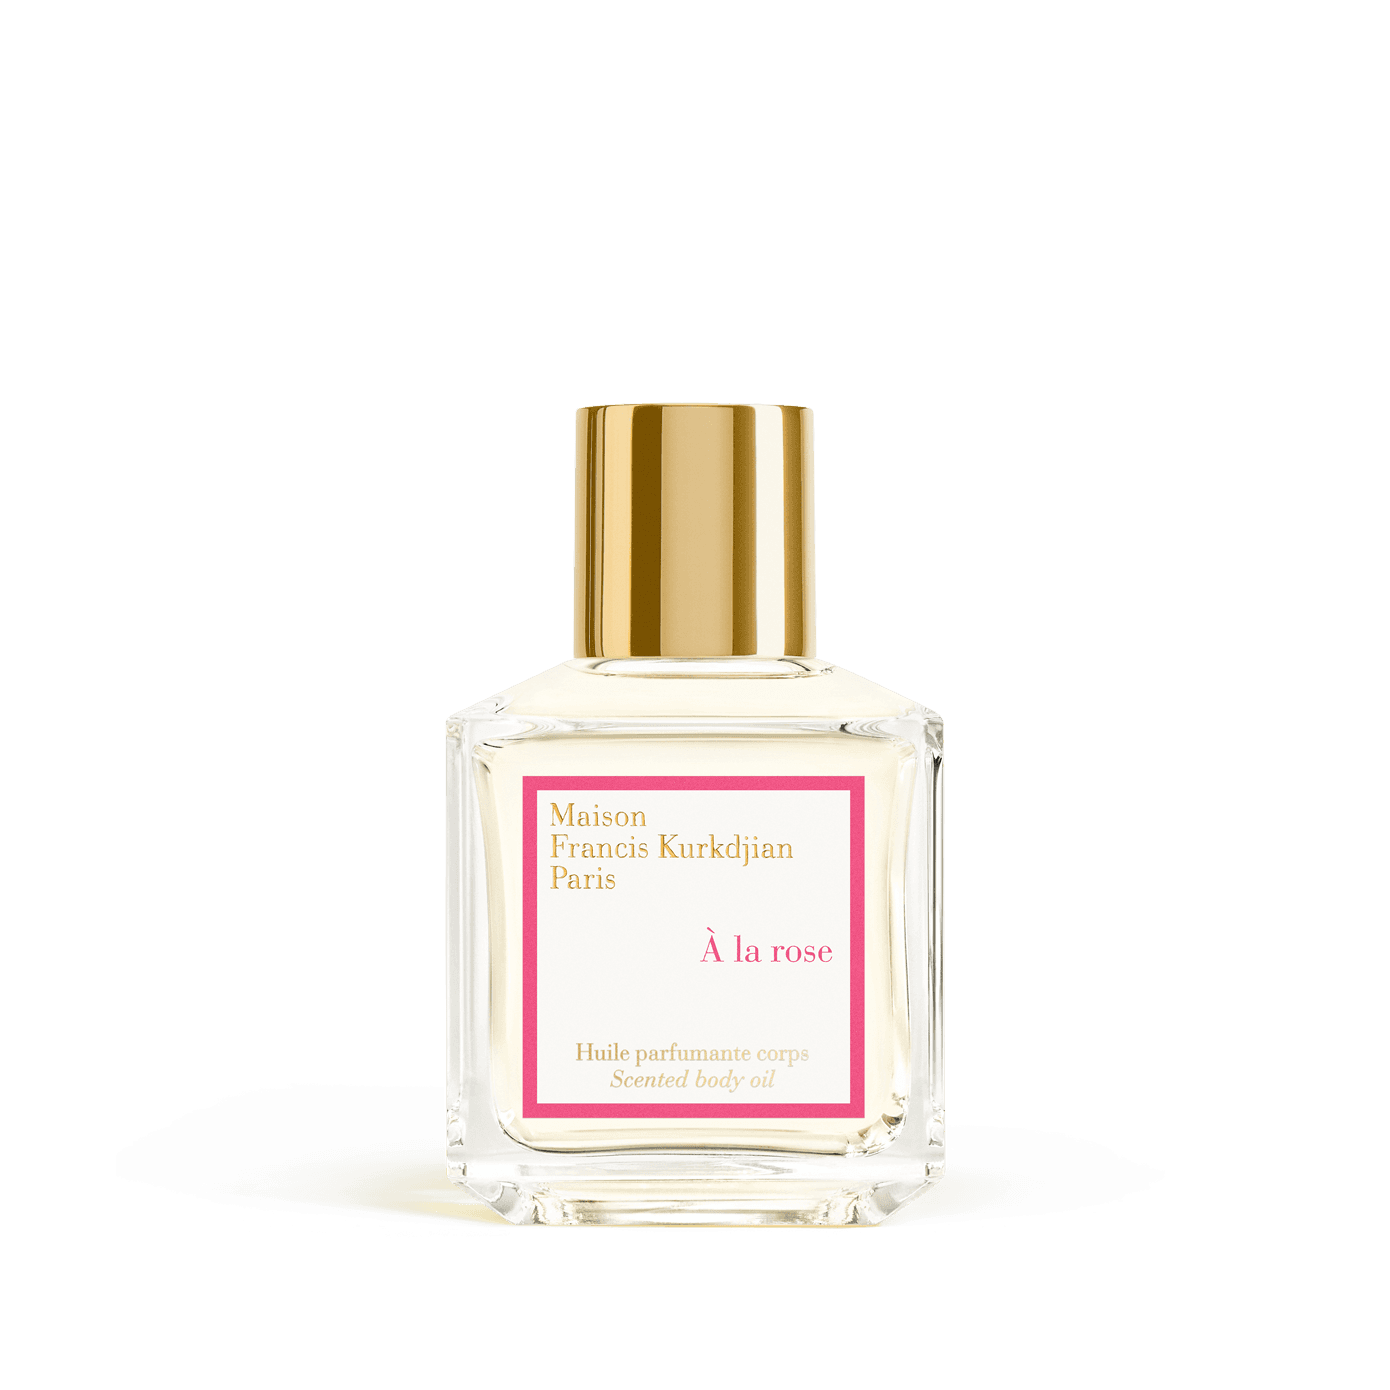 Maison Francis Kurkdjian - A la rose body oil | Perfume Lounge